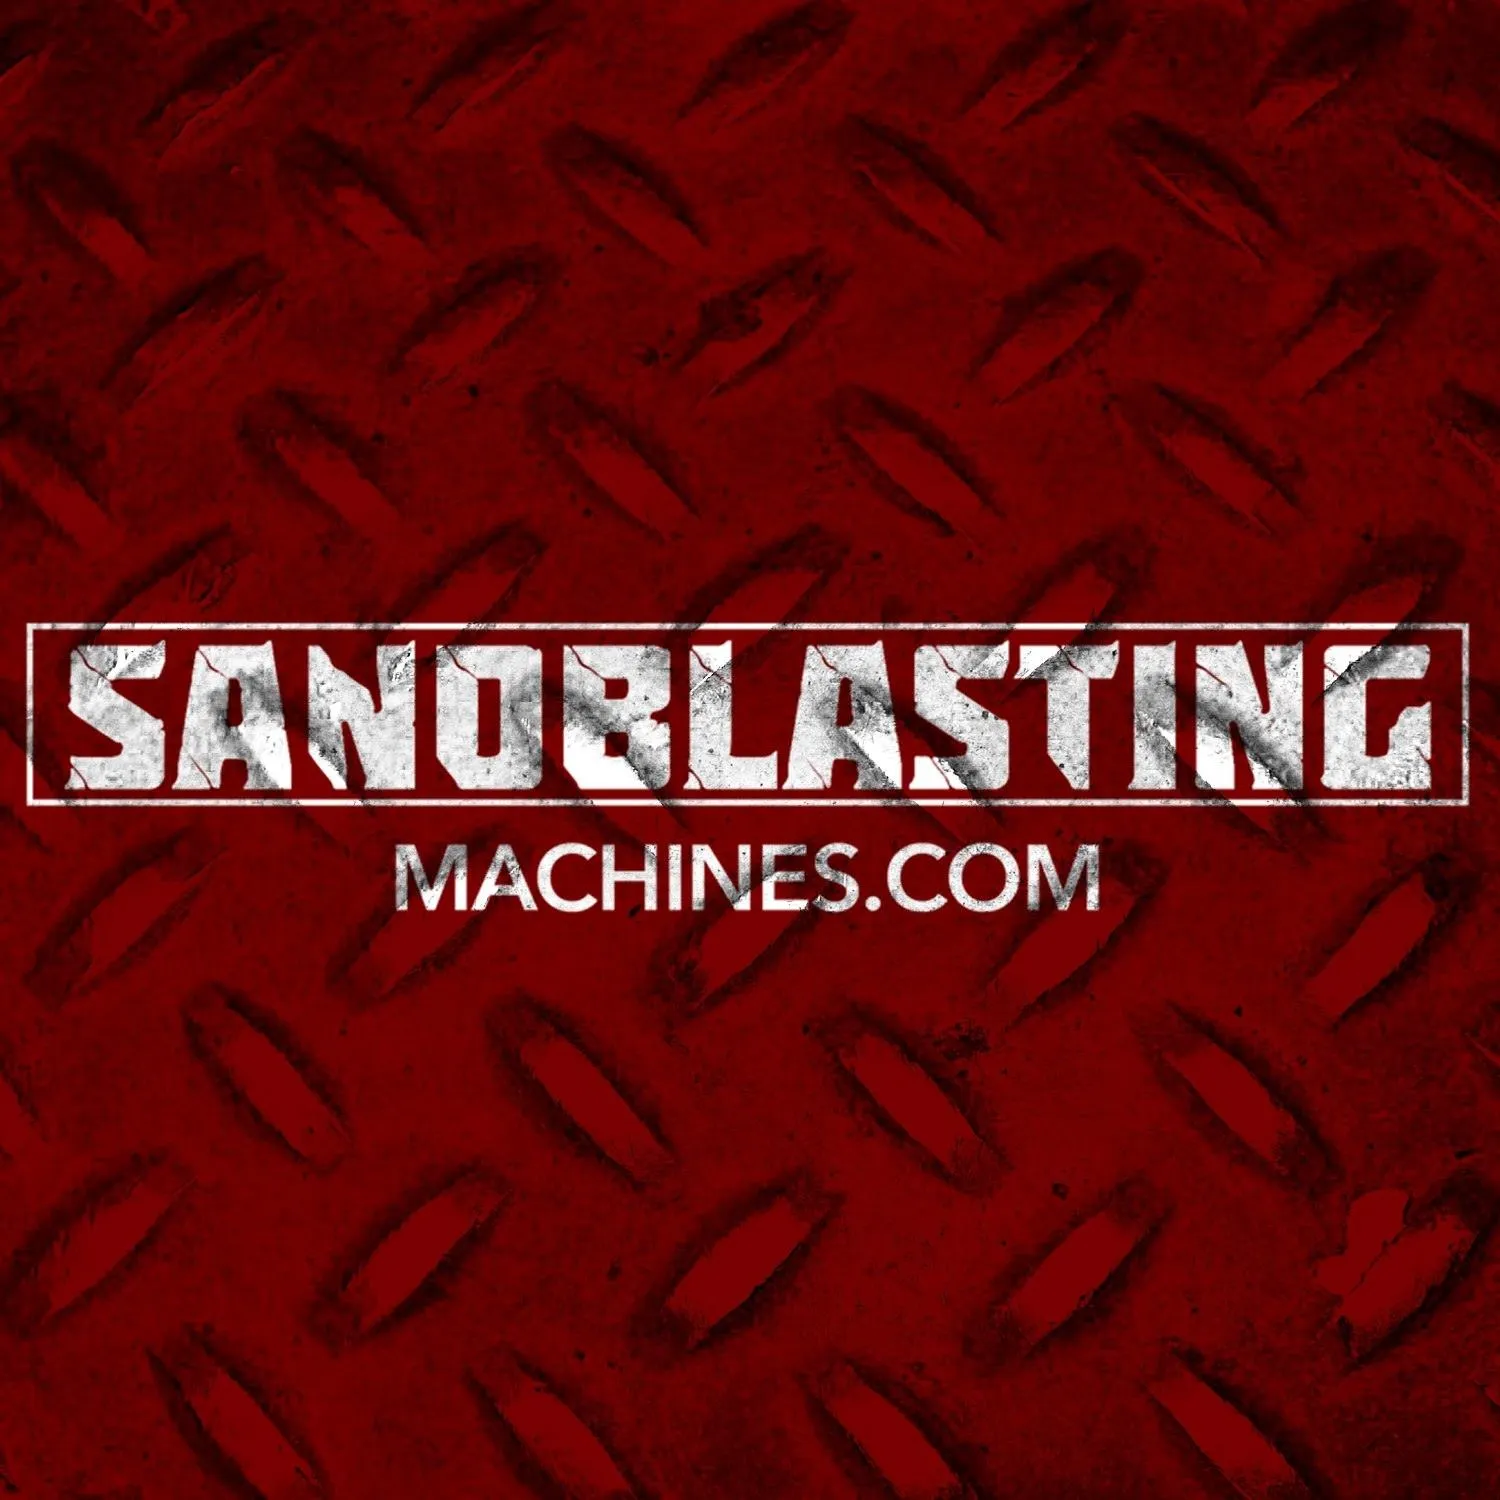 sandblastingmachines.com